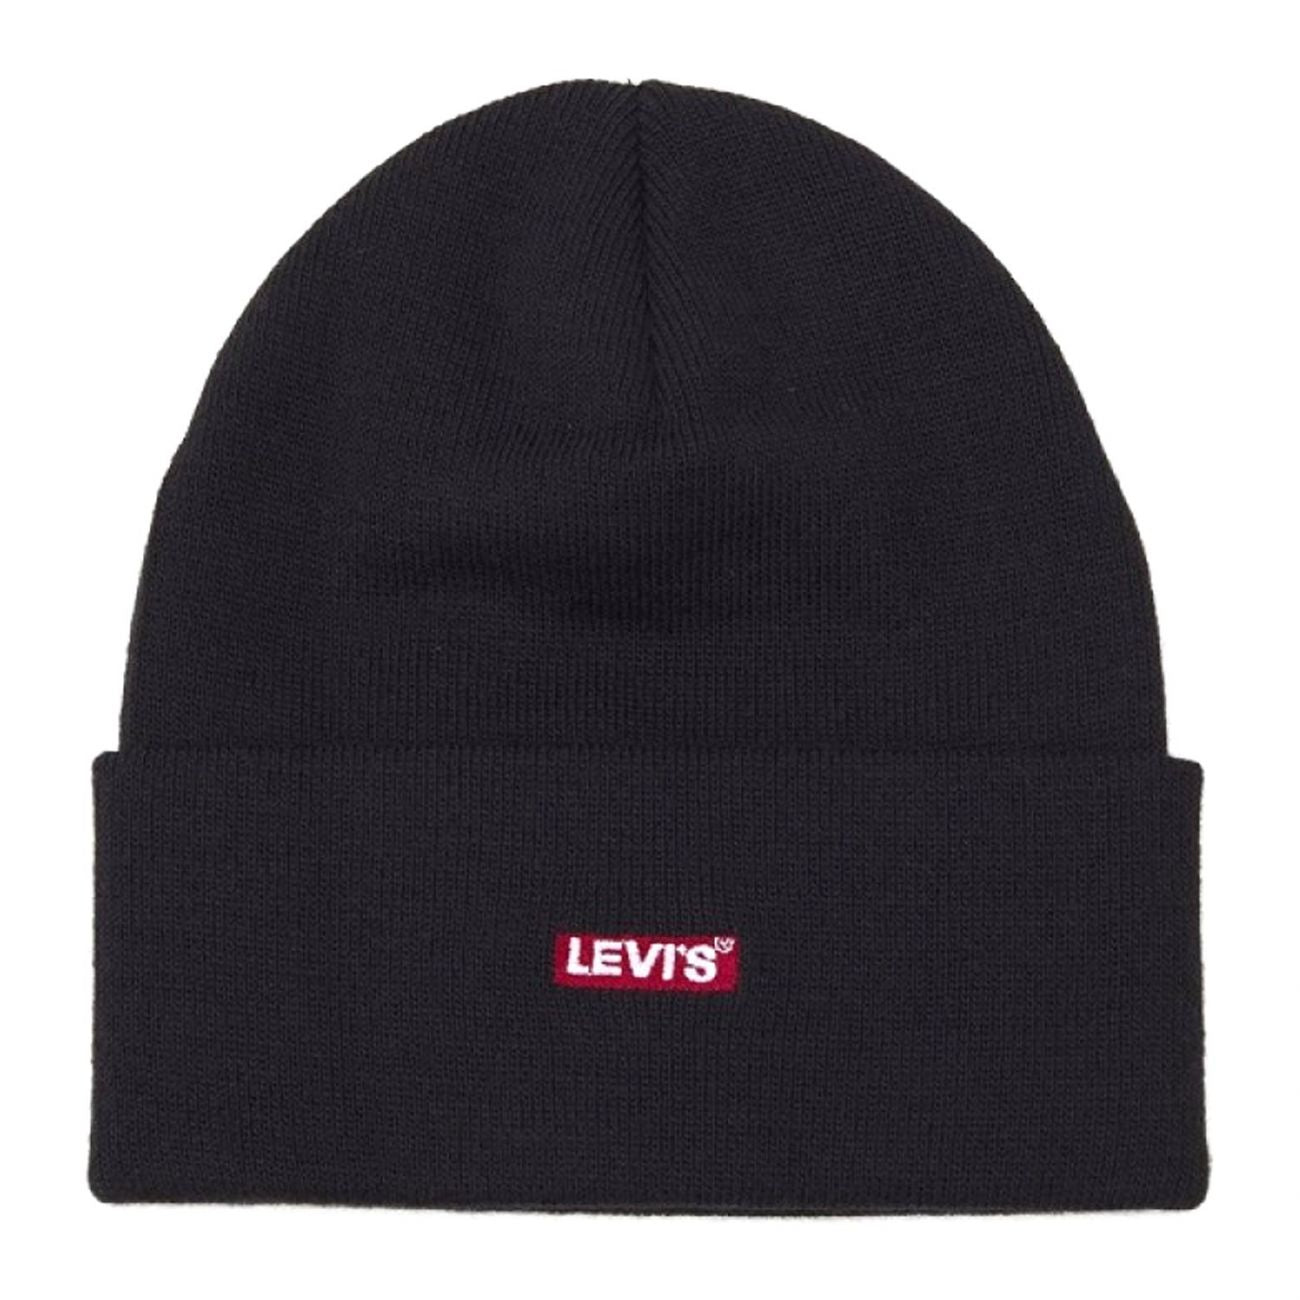 Levi's cappello 234078 059